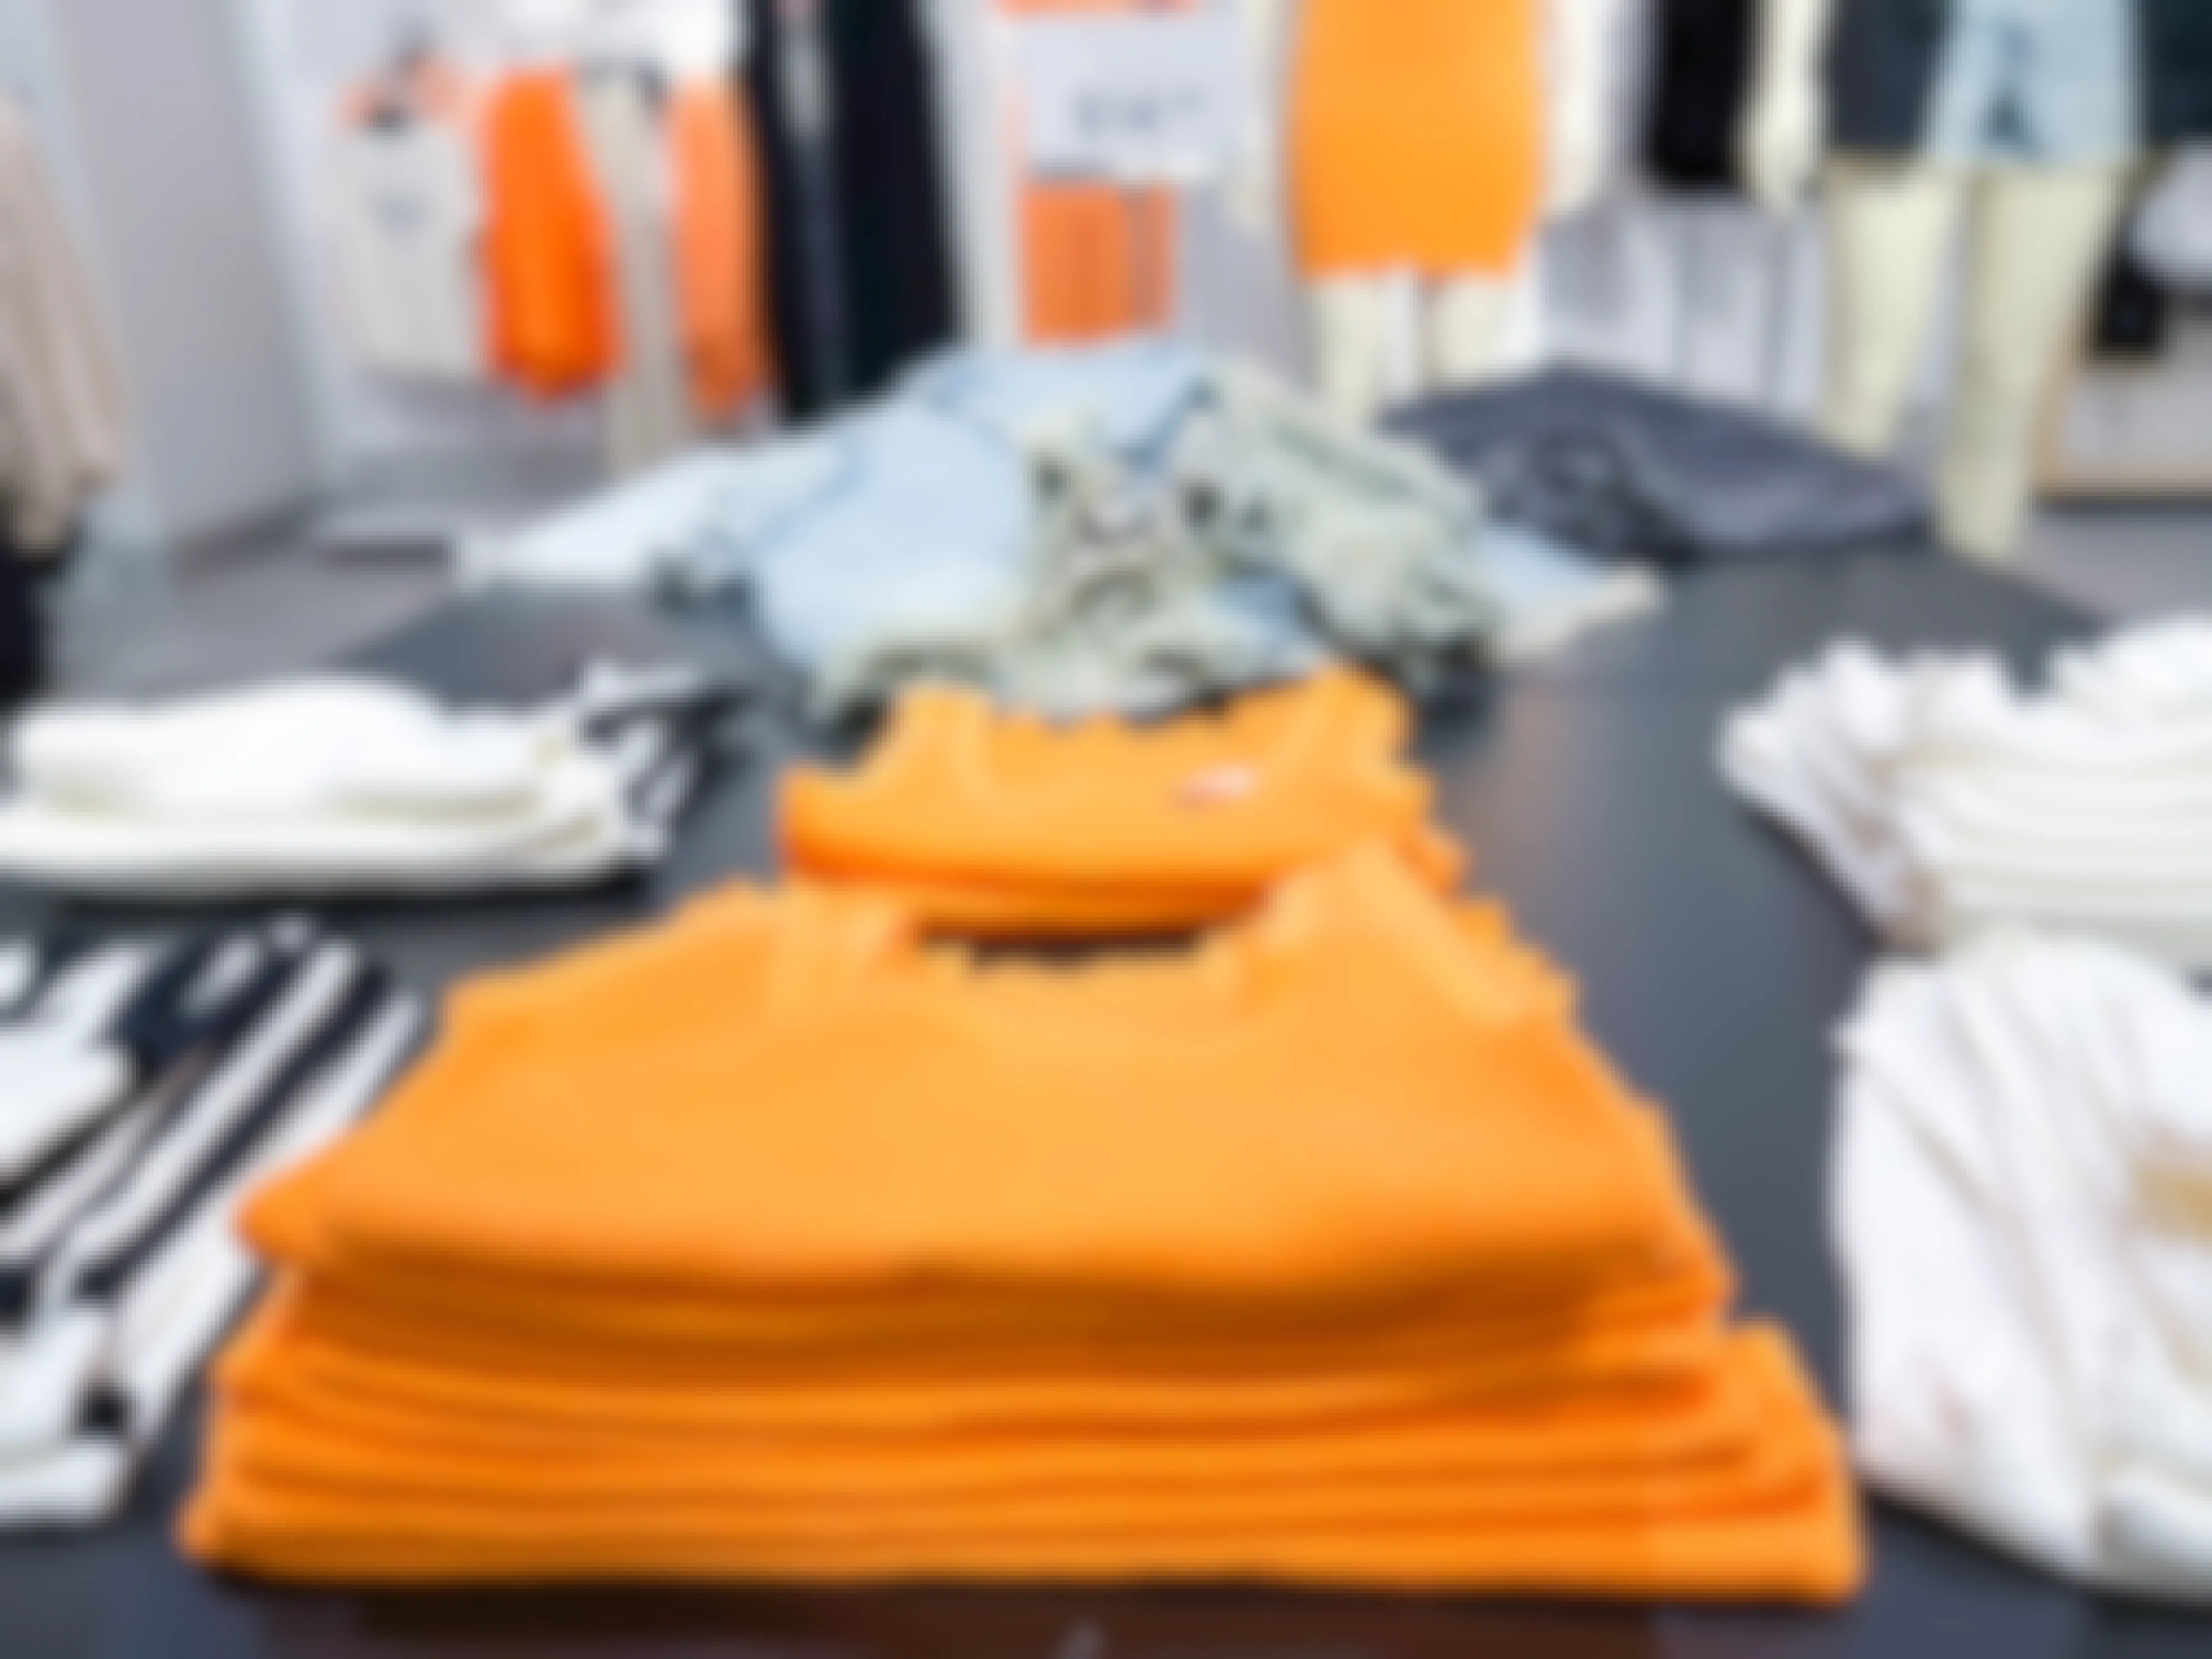 apparel-tank-top-close-up-orange-white